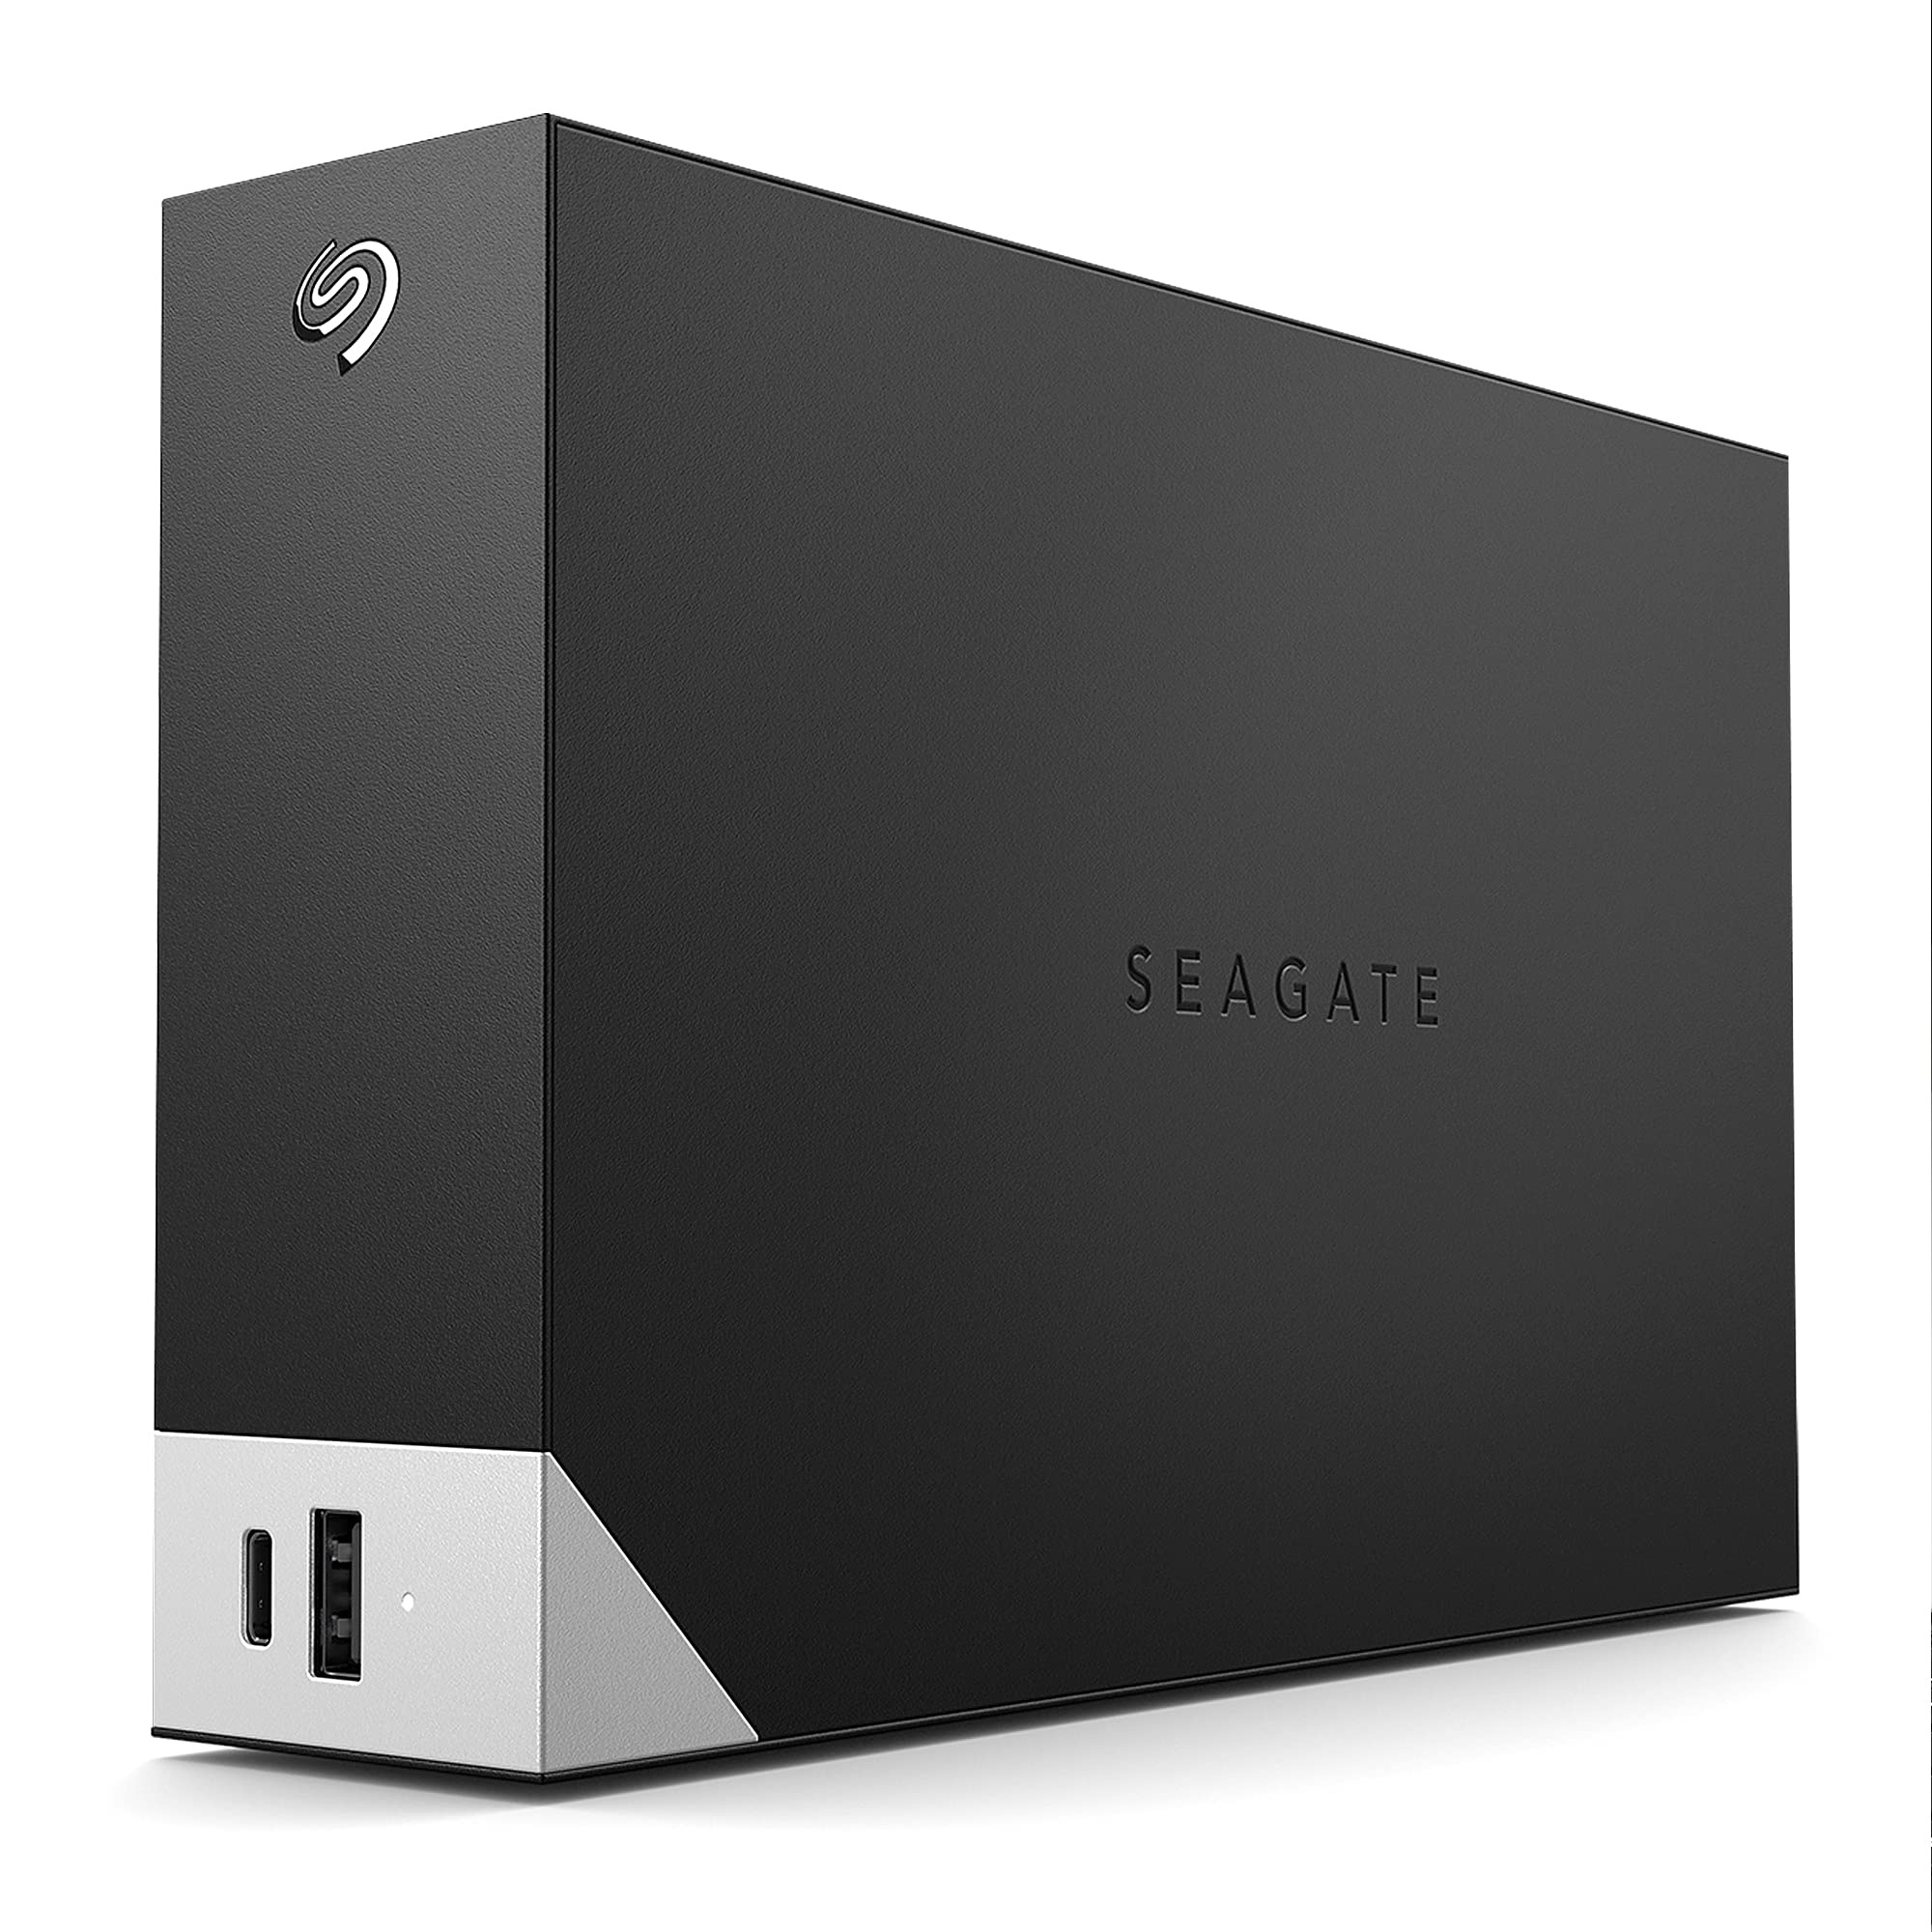 Seagate One Touch HUB 4TB externe Festplatte, 2-fach USB Hu, 3.5 Zoll, USB 3.0, PC, Notebook & Mac, inkl. 2 Jahre Rescue Service, Modellnr.: STLC4000400